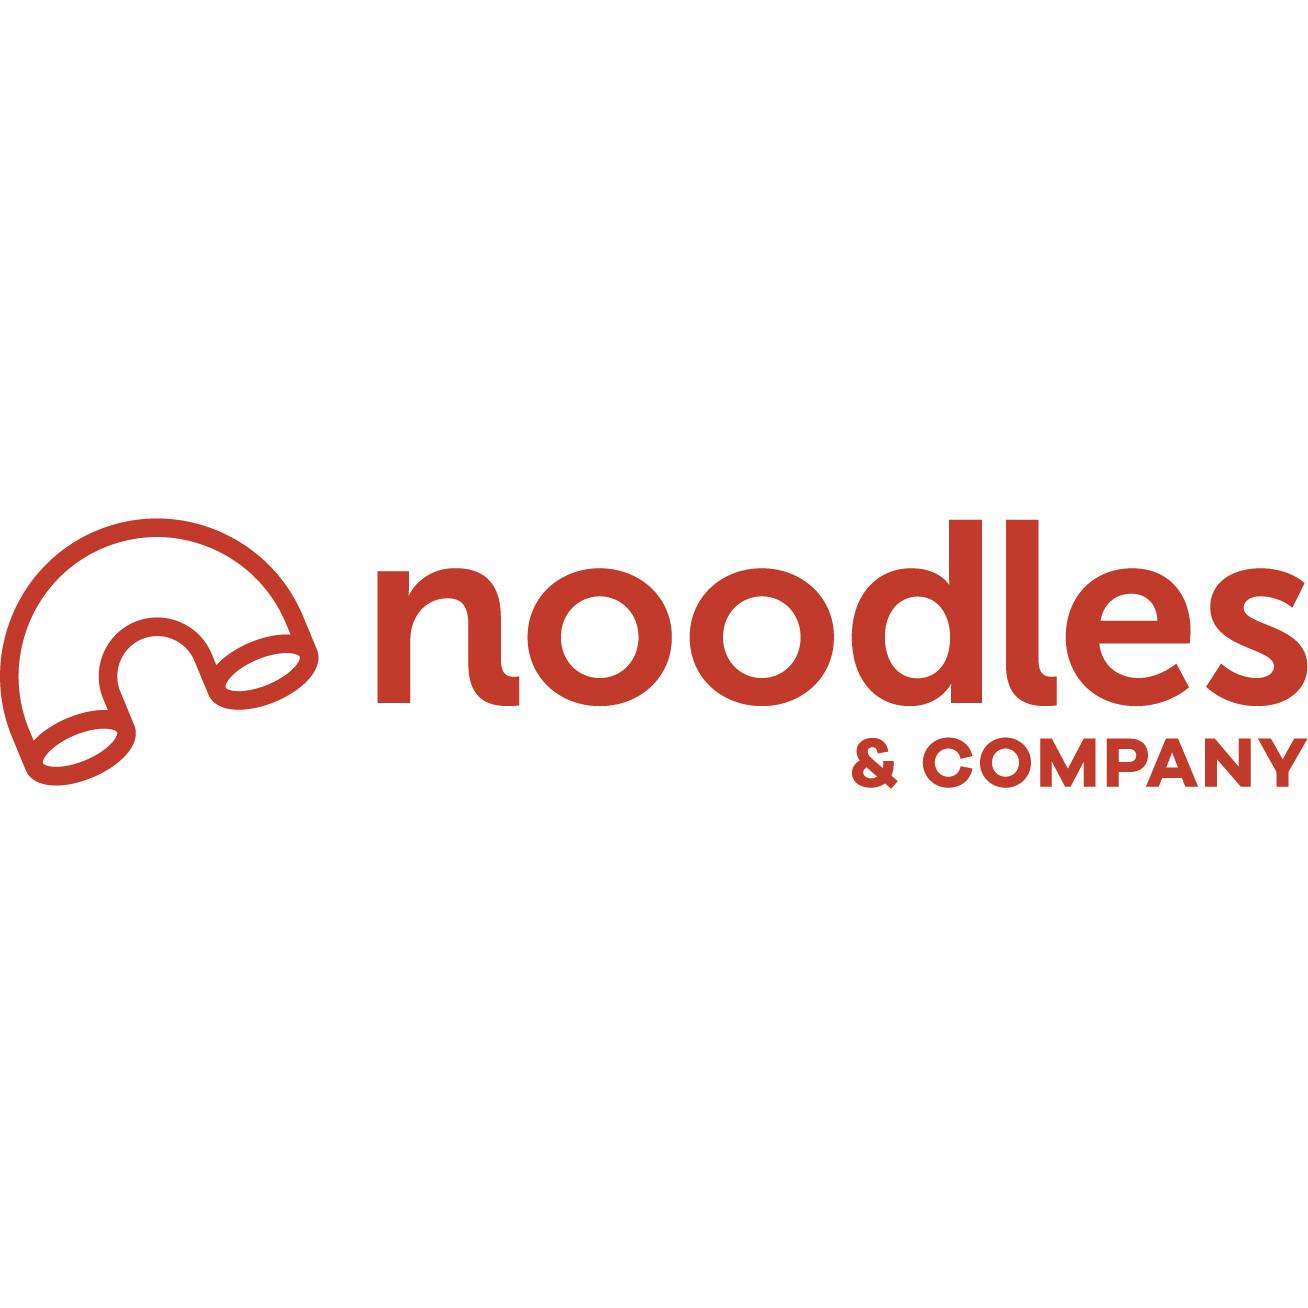 Noodles & Company - Onalaska Menu and Delivery in Onalaska WI, 54650